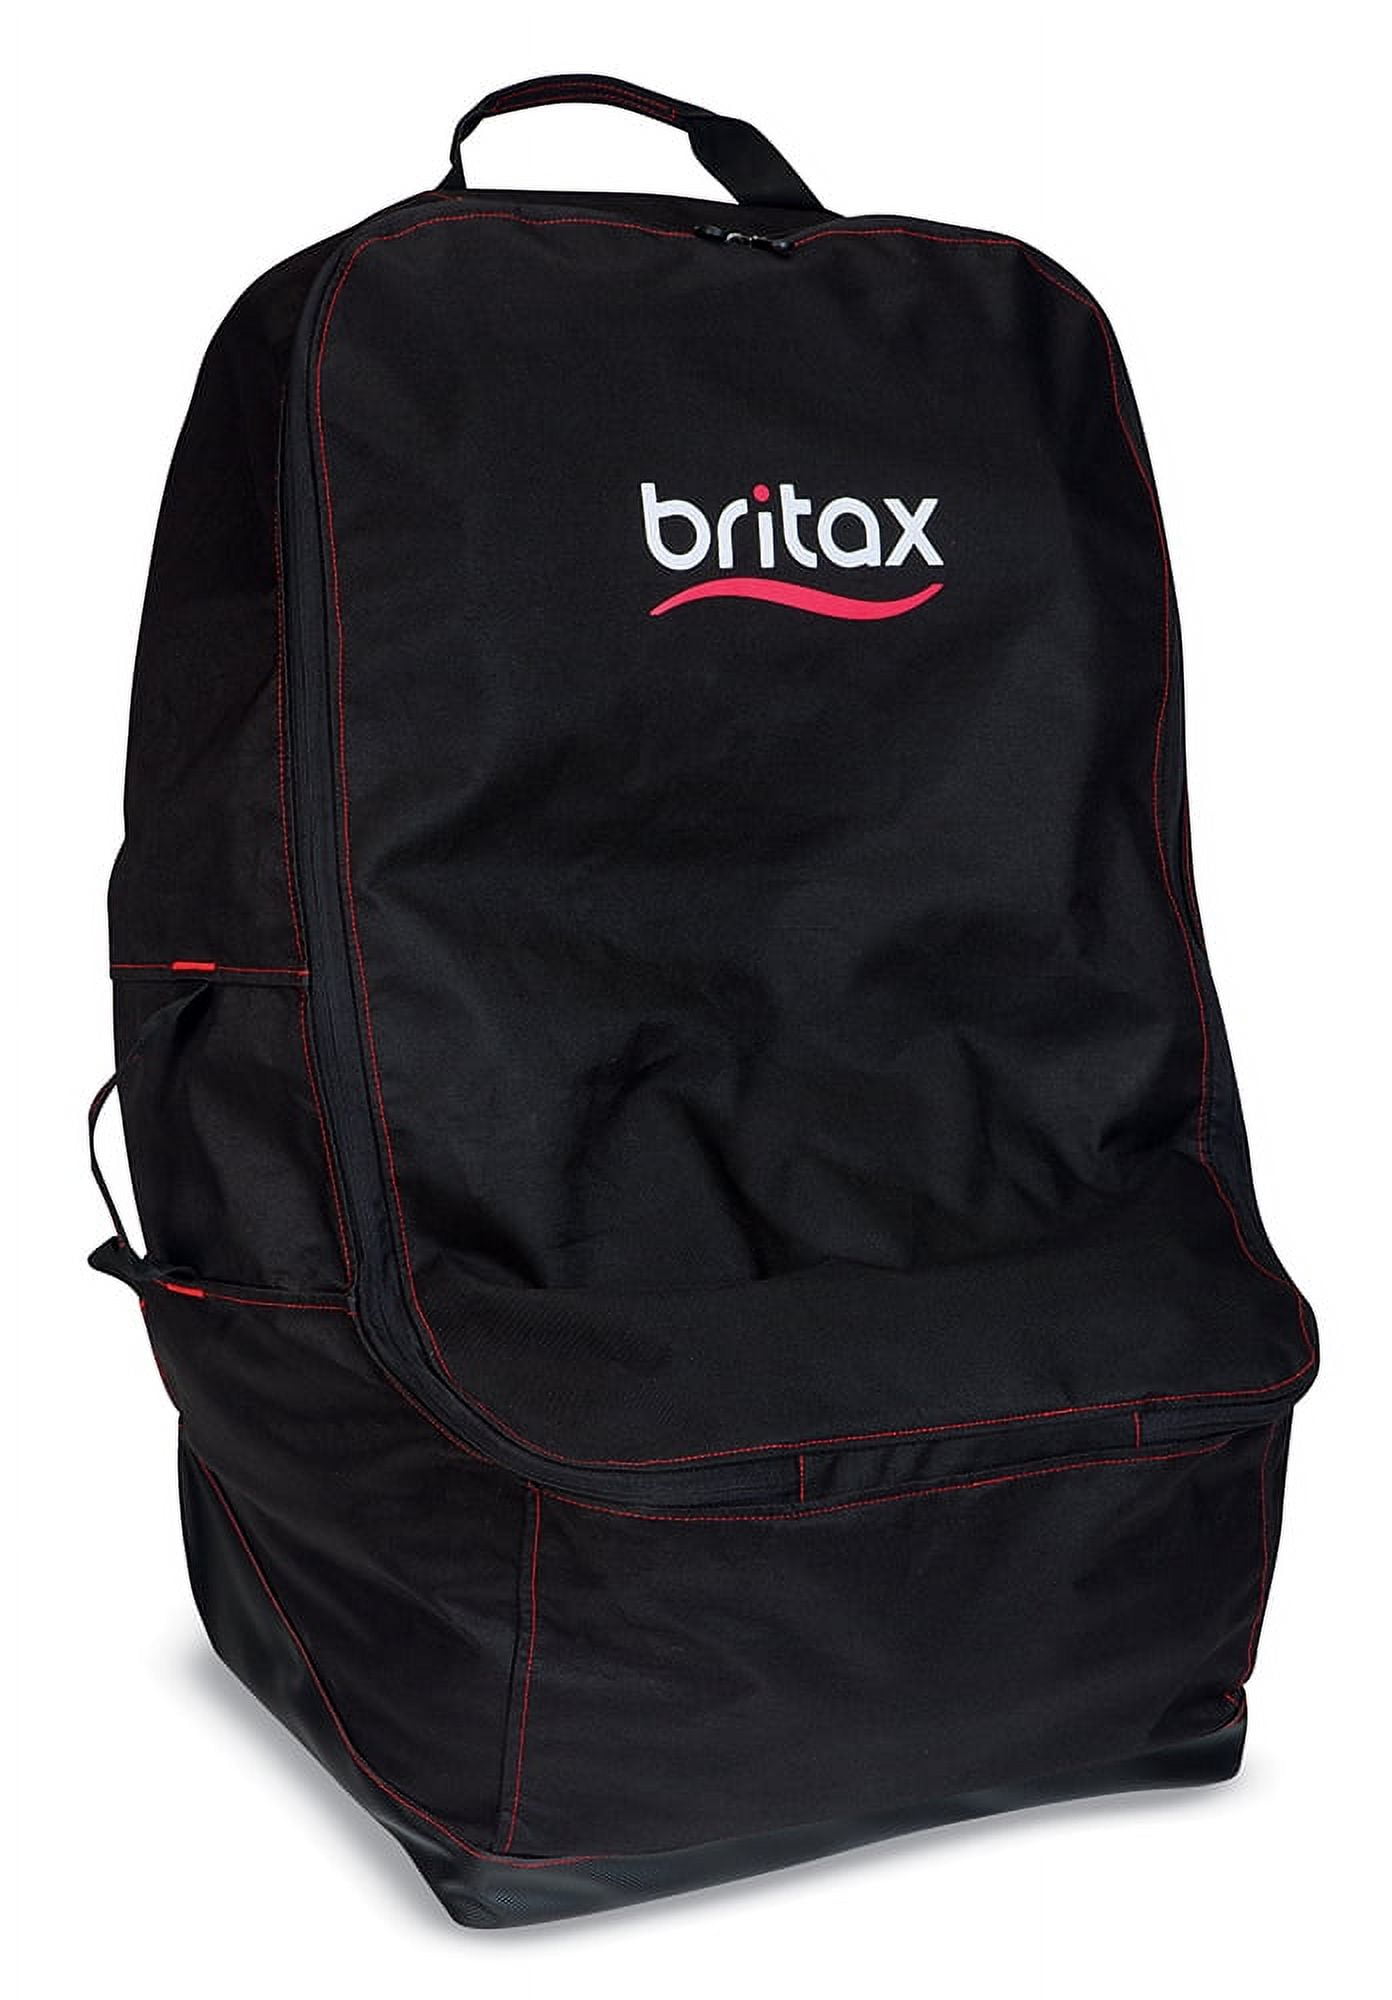 Britax Infant Car Seat Travel Bag for Car Seat, Backpack, Black 